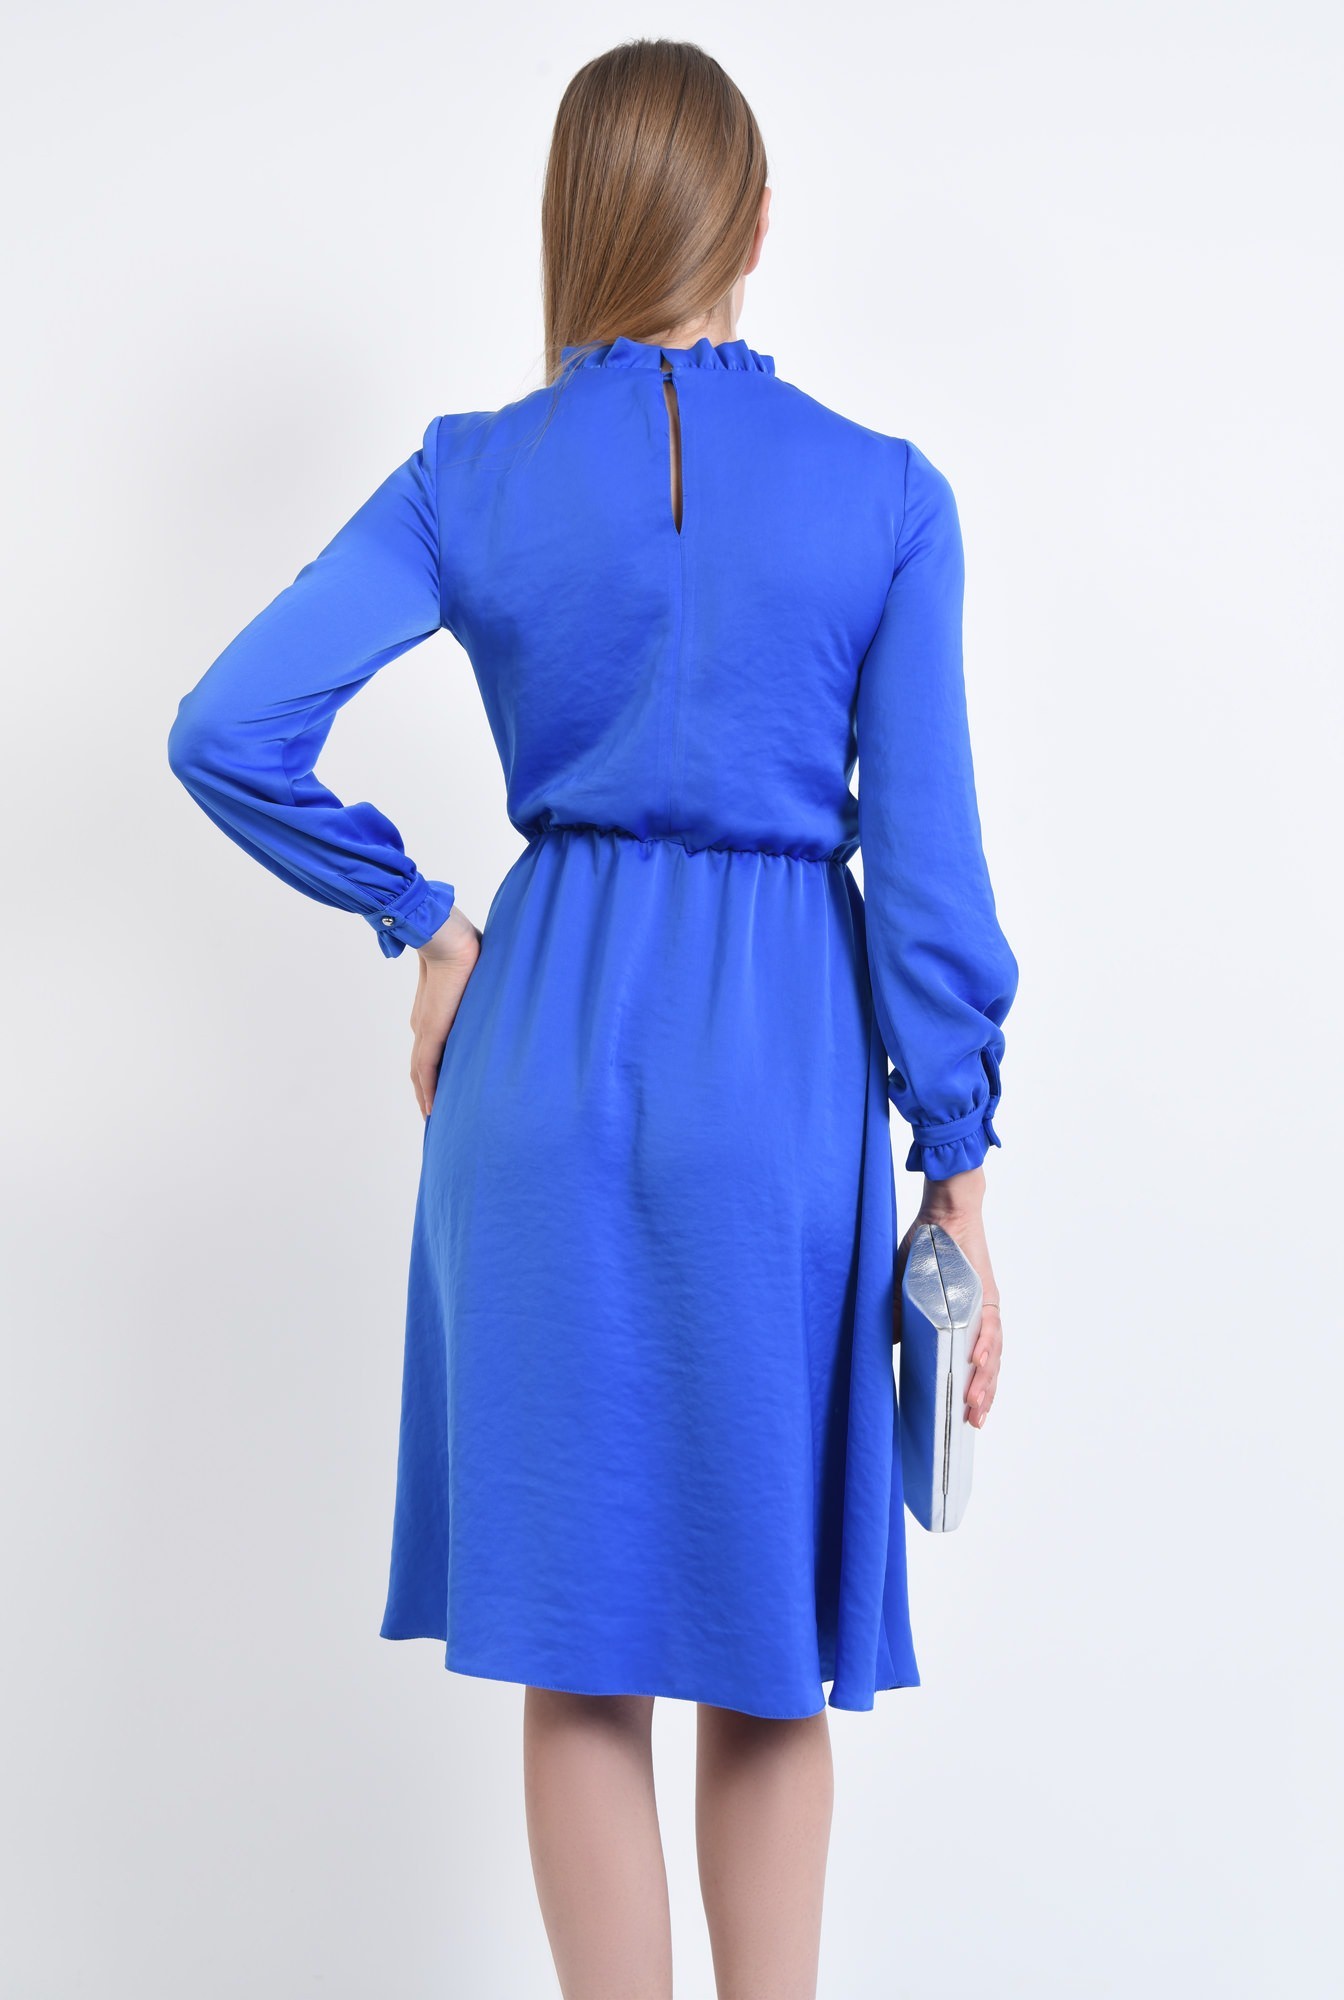 1 - rochie eleganta, evazata, midi, albastru, rochii online